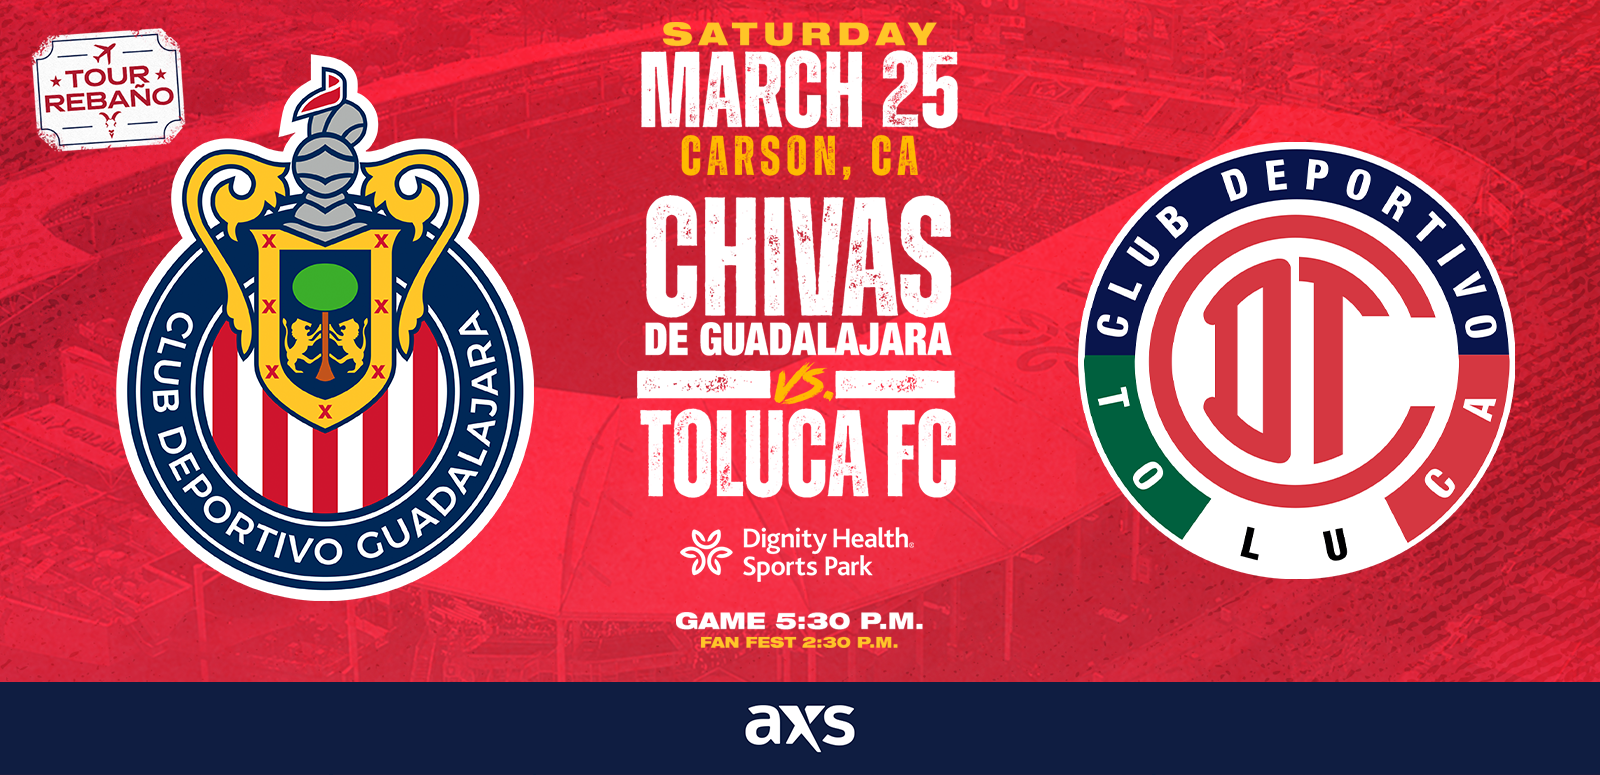 Tour Rebaño: Chivas Guadalajara vs. Toluca FC